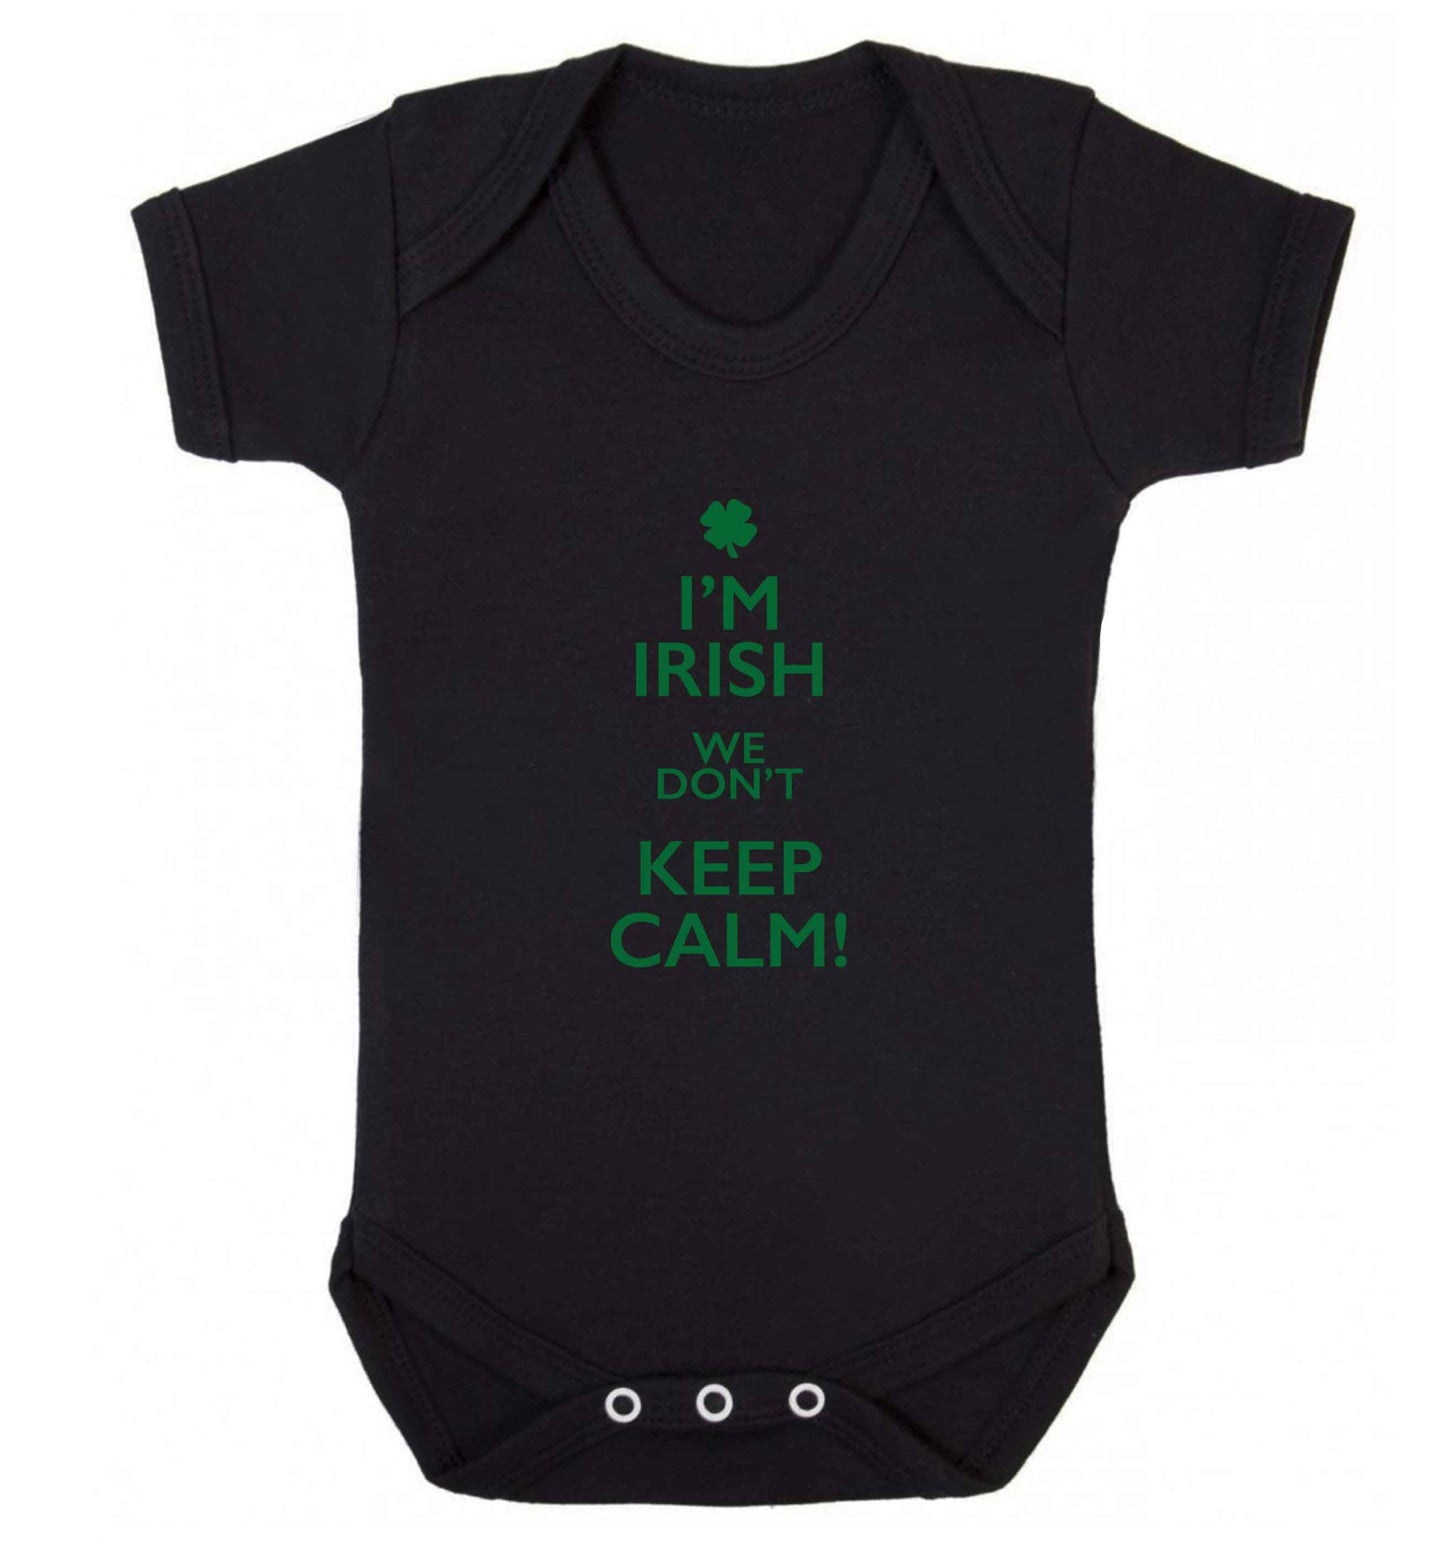 I'm Irish we don't keep calm baby vest black 18-24 months